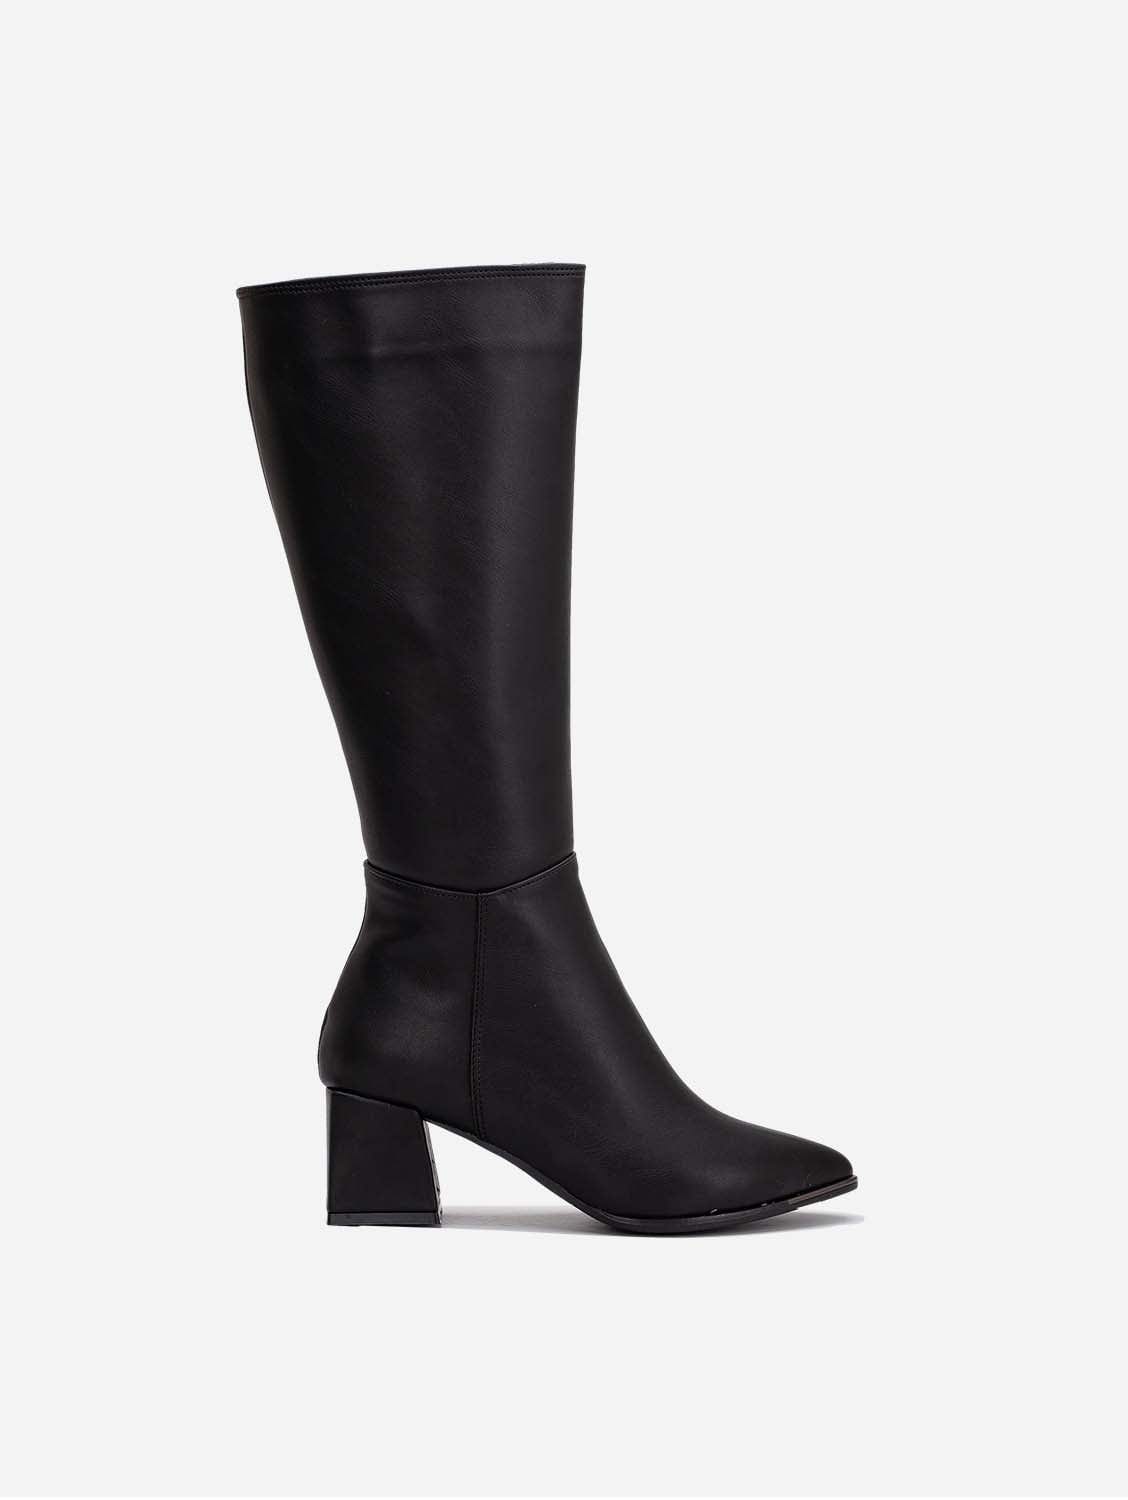 Prologue Shoes Lizette Vegan Leather Knee High Boots | Black UK3 / EU36 / US5.5